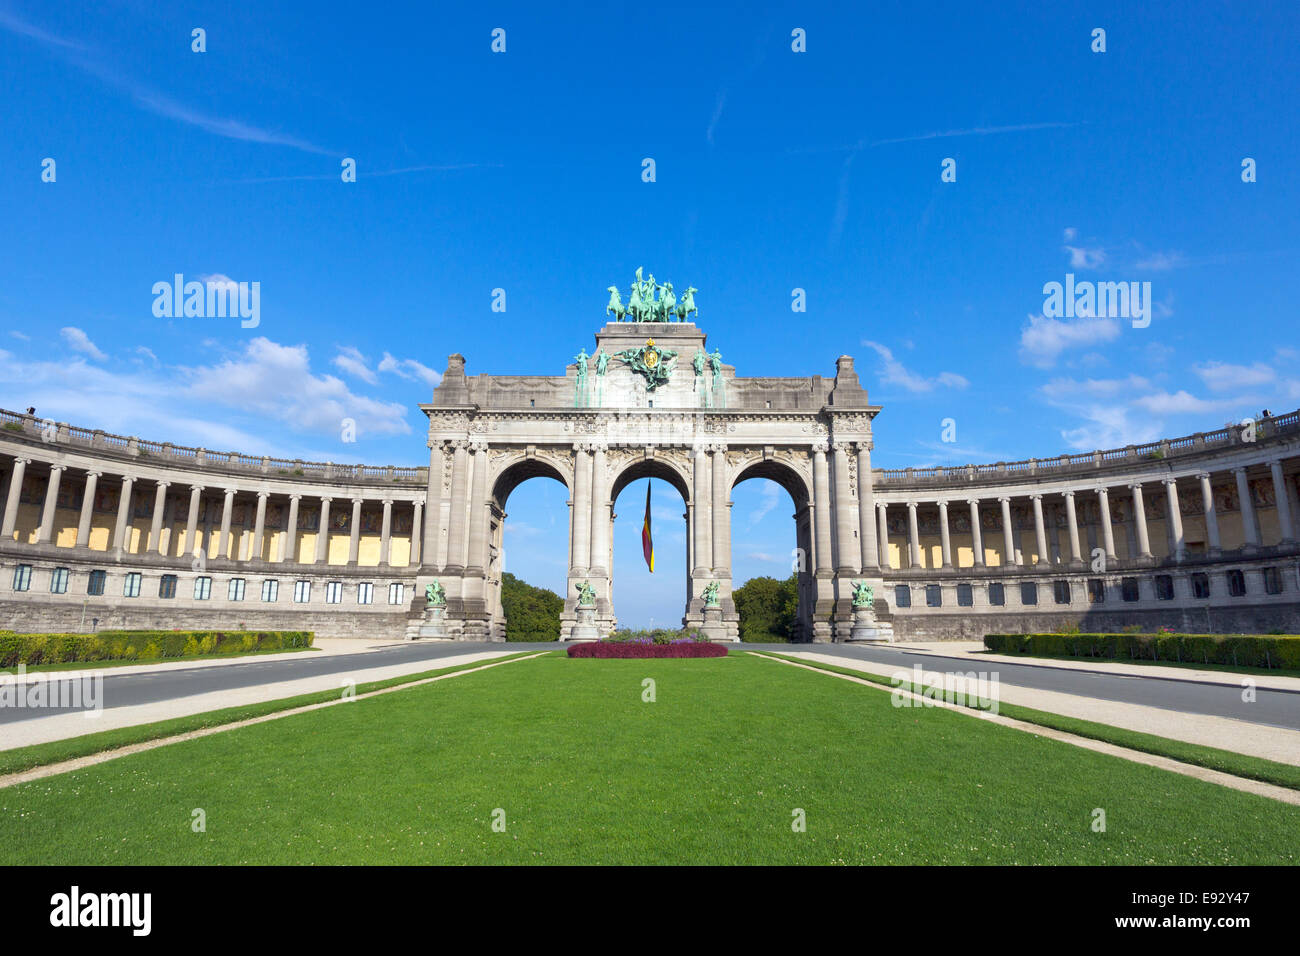 Arco Triunfal en el Parc du Cinquantenaire, Bruselas, Bélgica Foto de stock